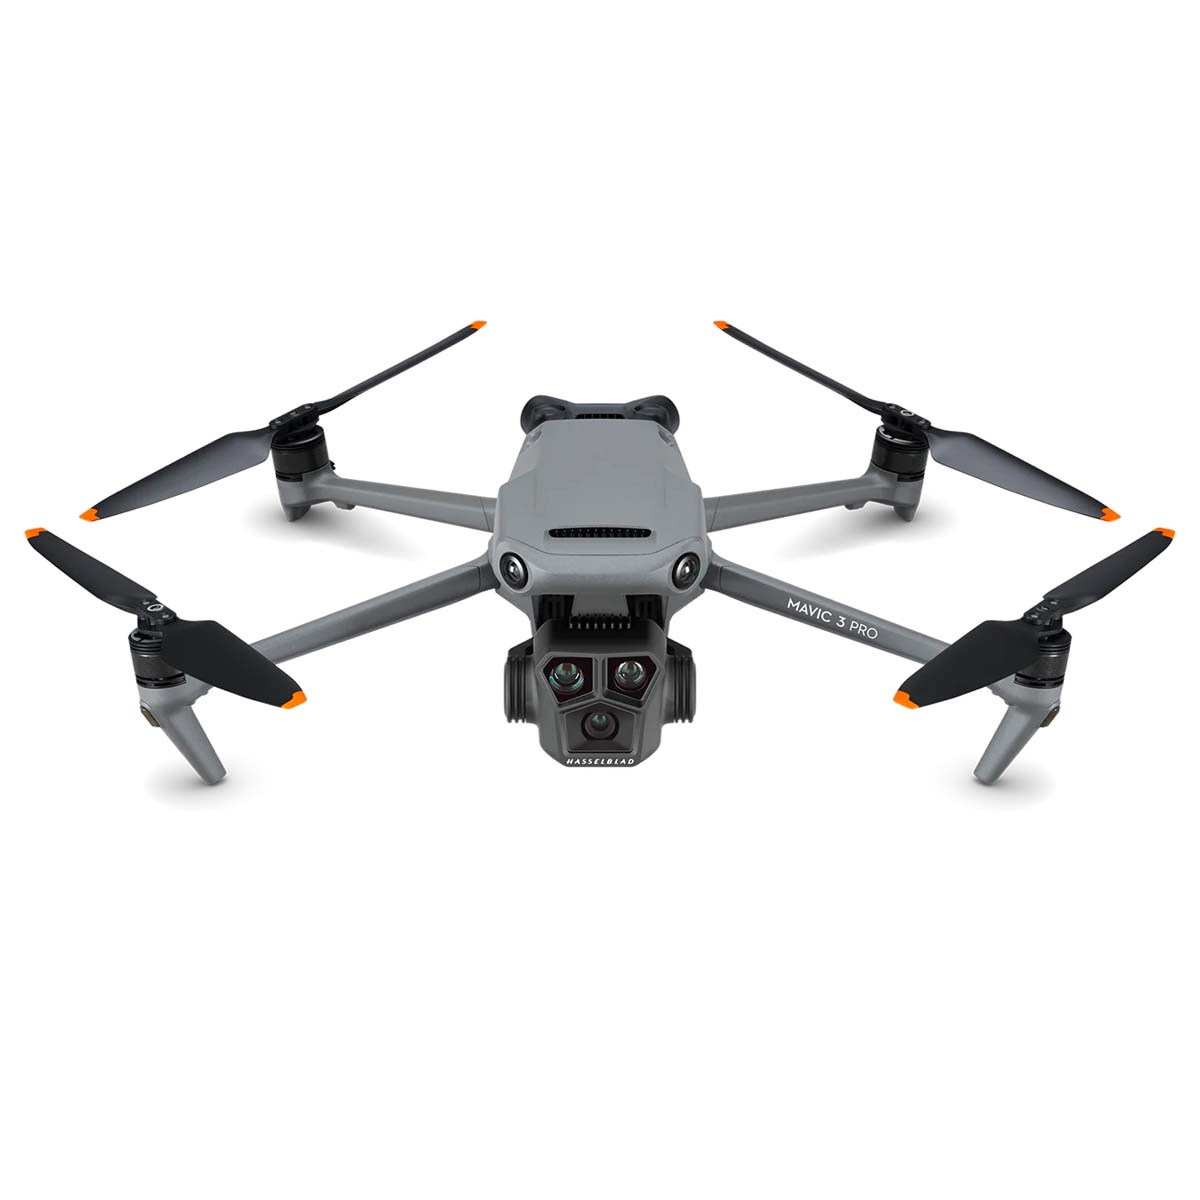 "DJI Mavic 3 Pro" drone aircraft